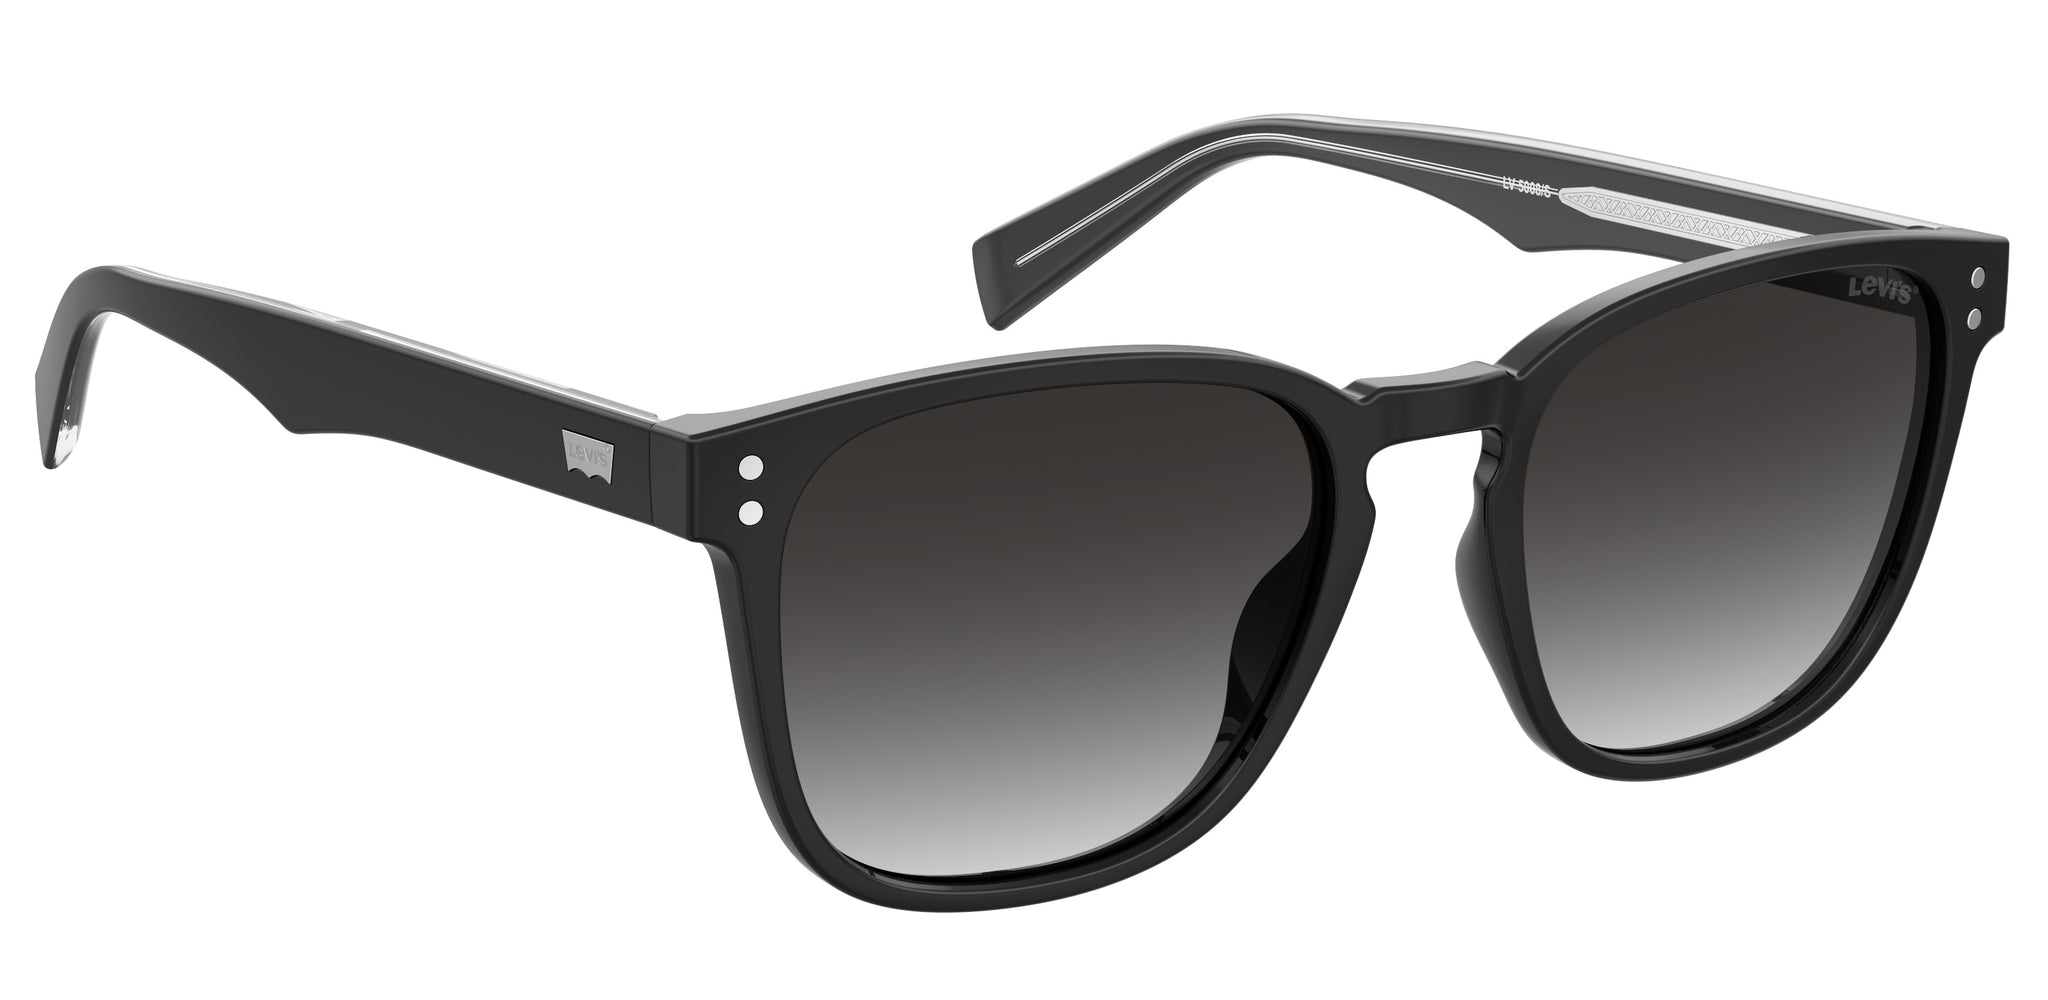 Sunglasses Black Frame Grey Color Lens Stock Photo 222157849 | Shutterstock